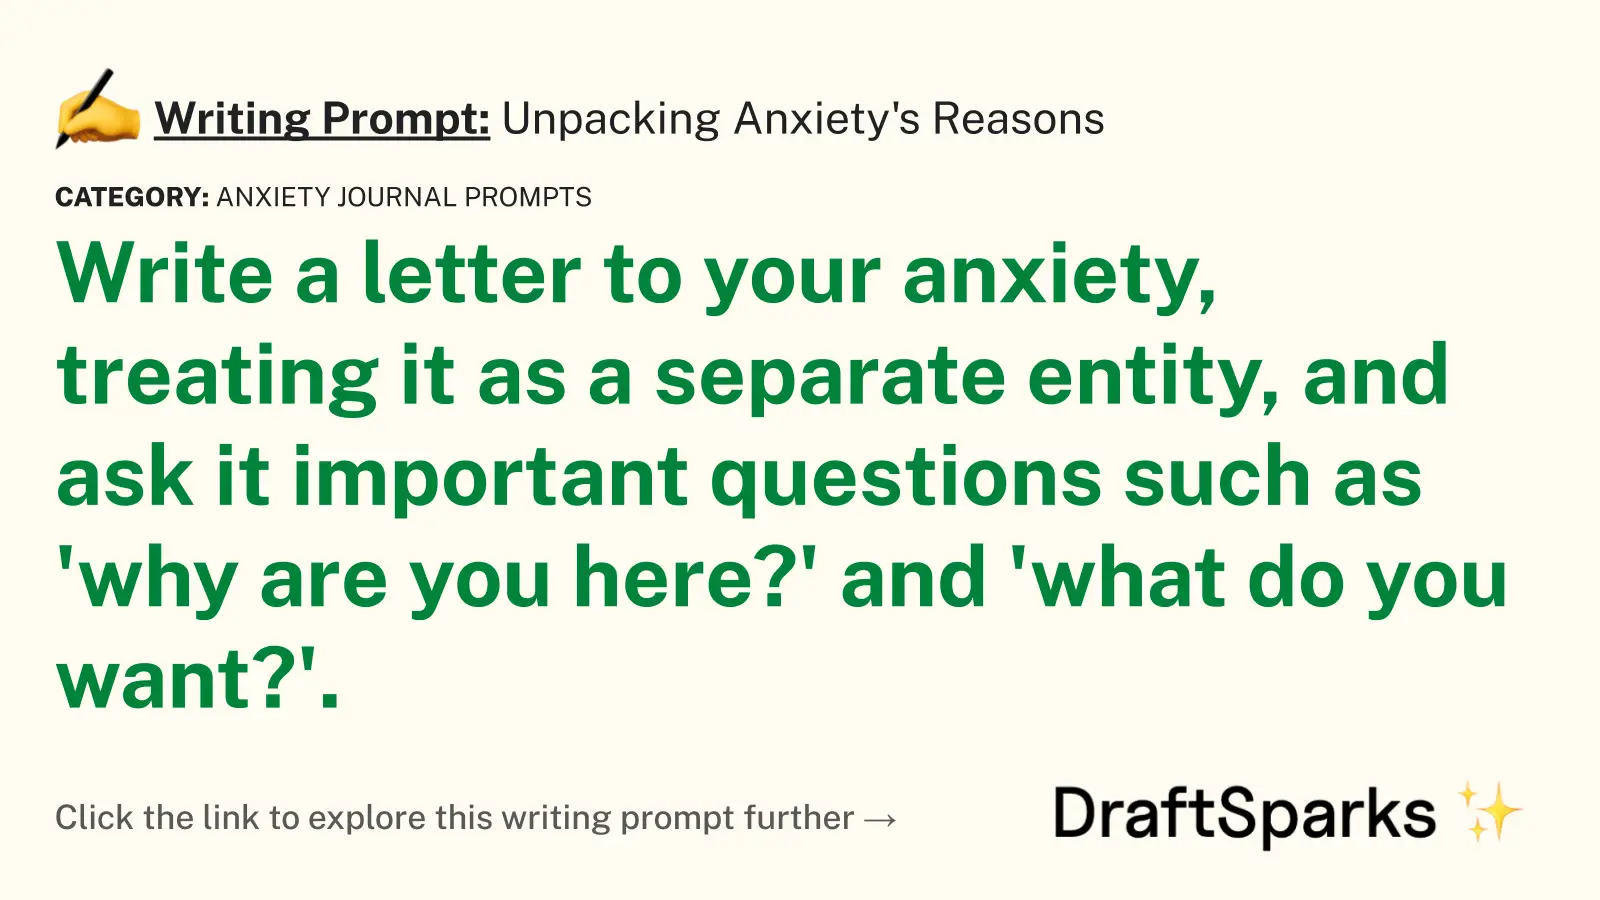 Unpacking Anxiety’s Reasons